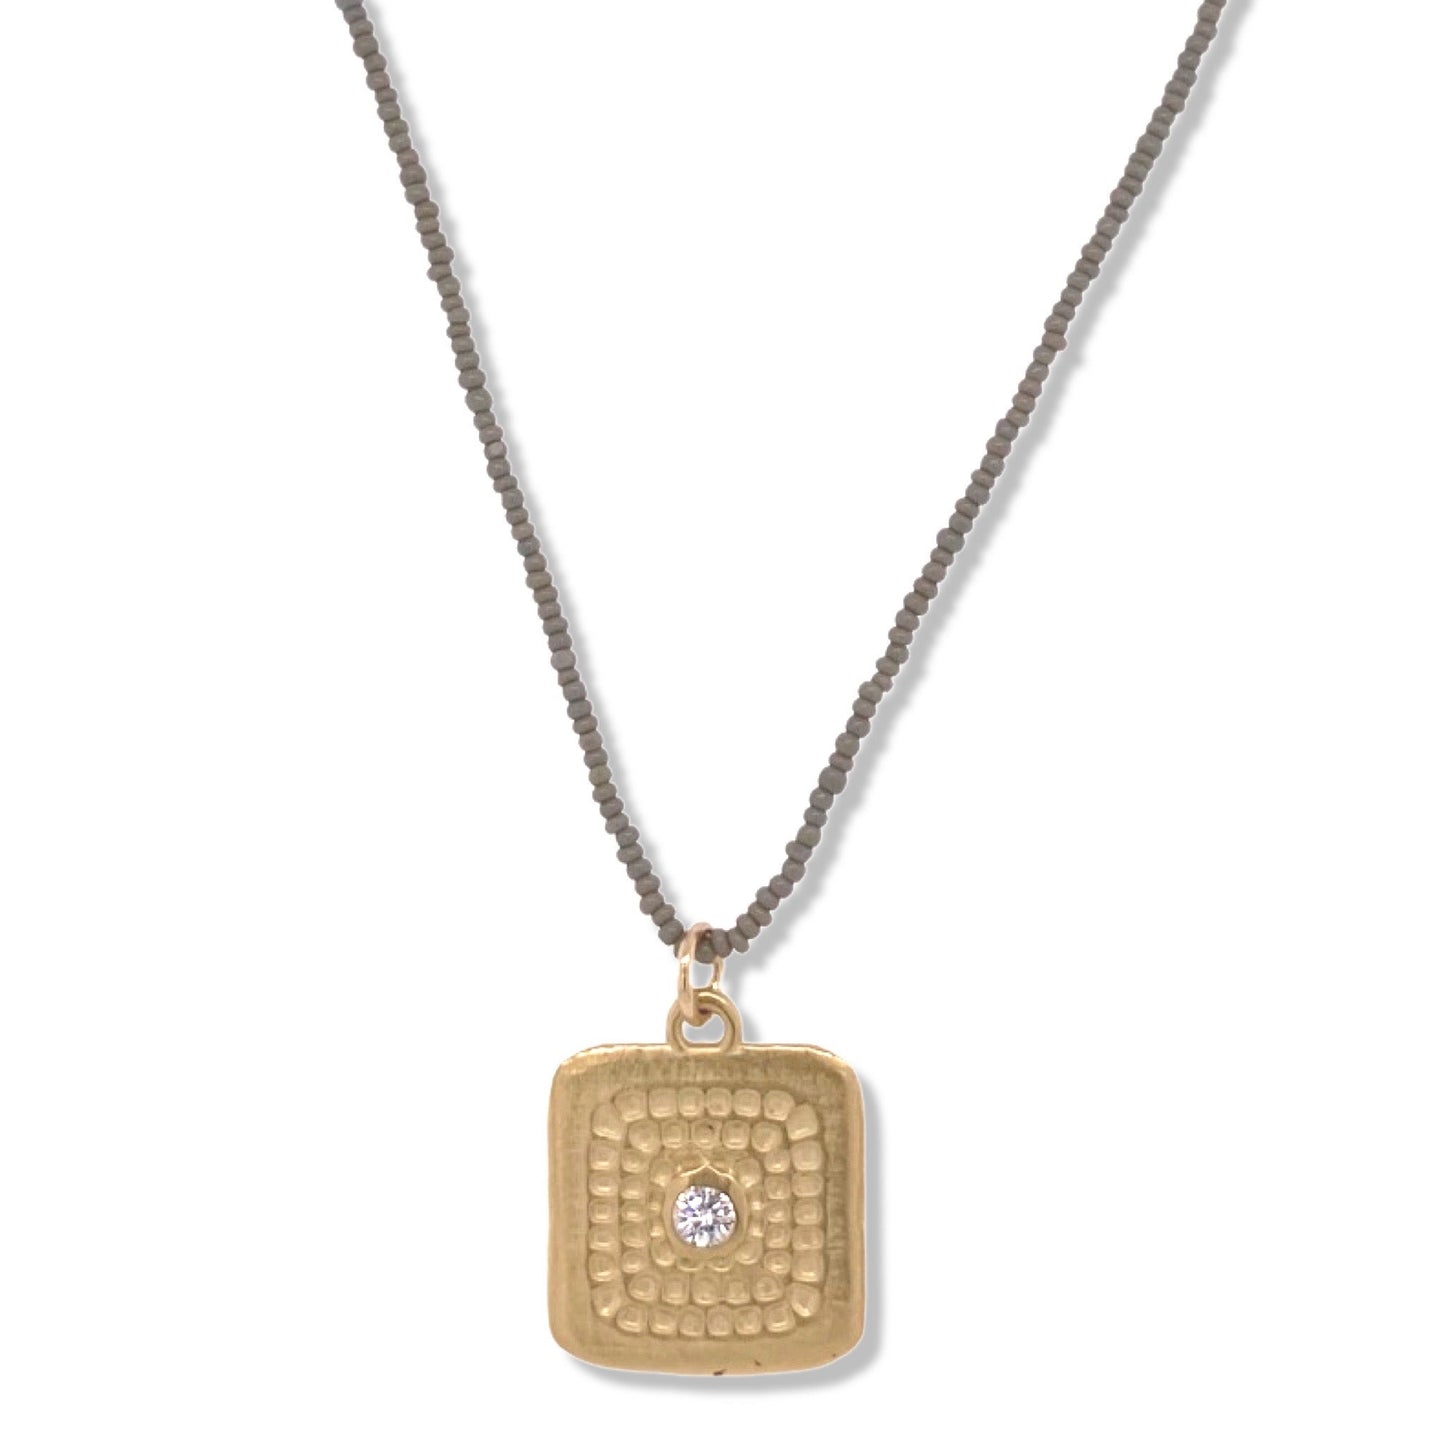 Riu necklace in gold on teeny charcoal beads | Nalu | Nantucket